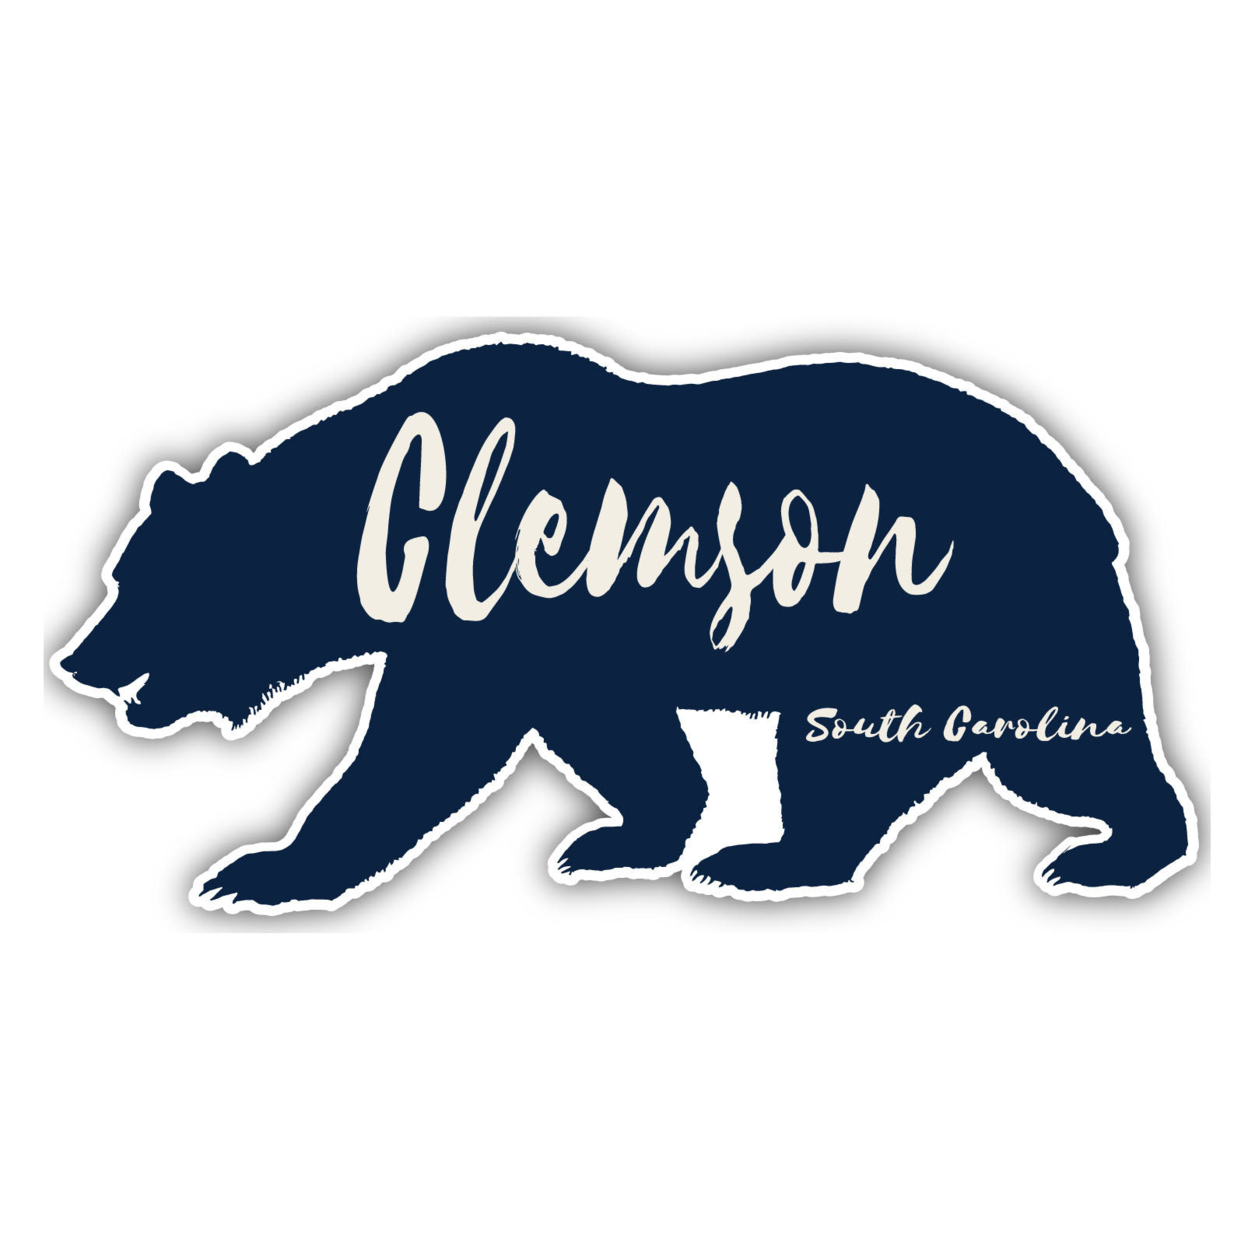 Clemson South Carolina Souvenir Decorative Stickers (Choose Theme And Size) - 4-Pack, 2-Inch, Tent